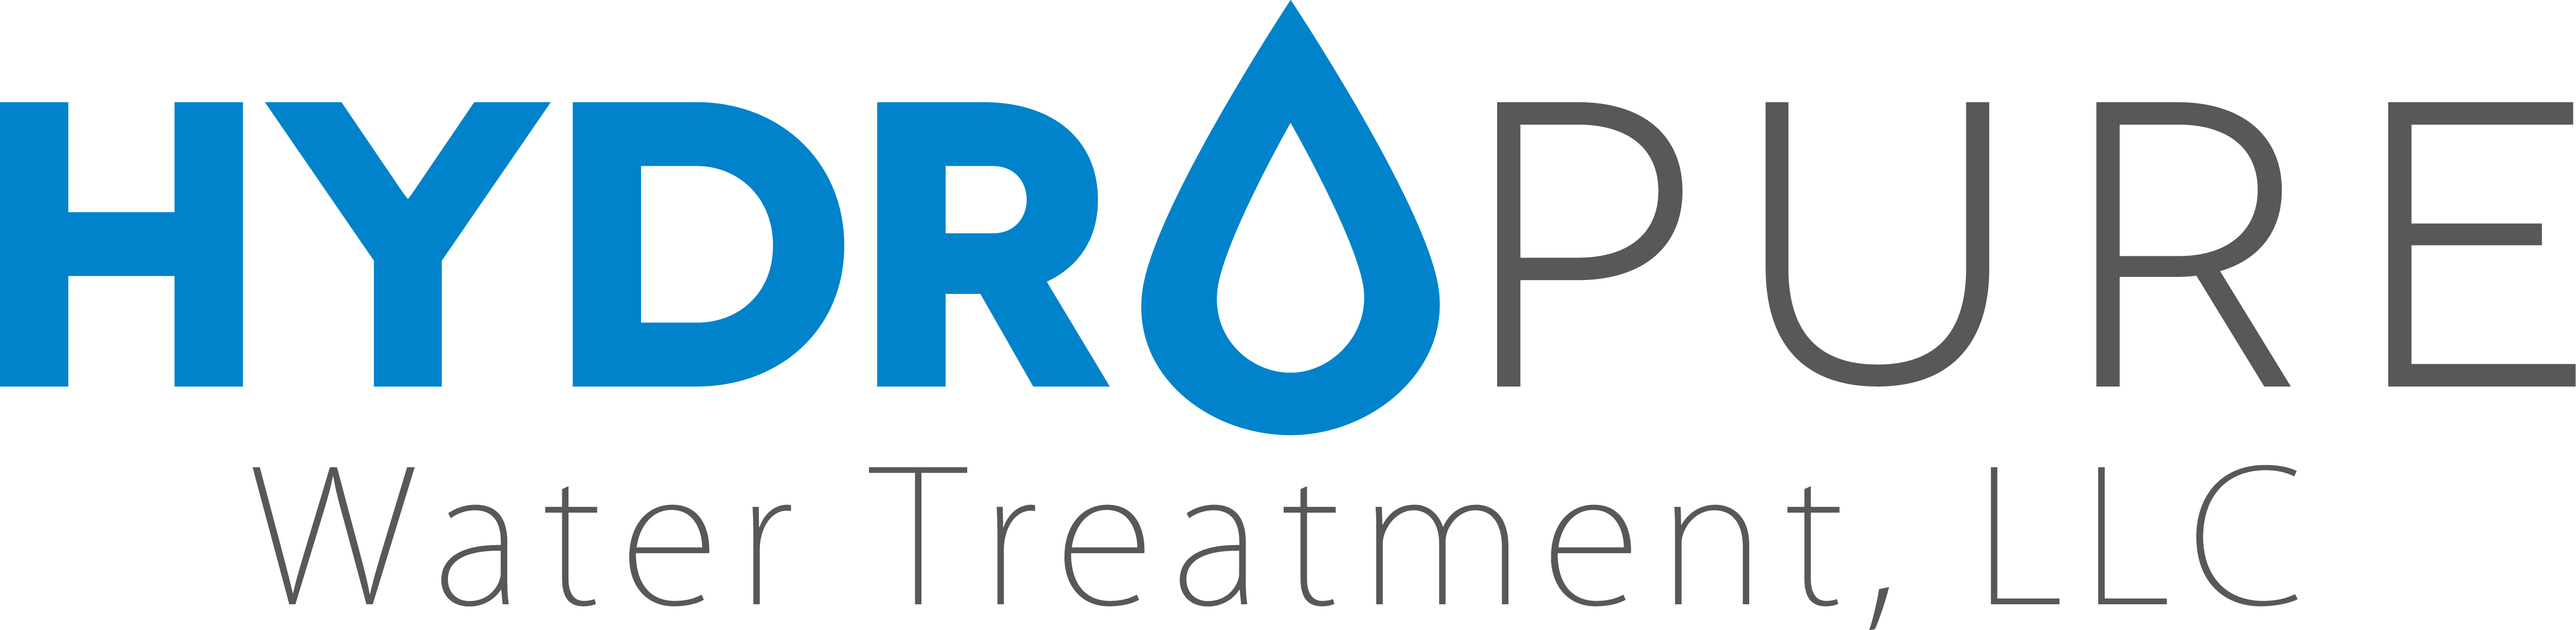 Hydro-Pure Water Treatment, LLC Logo